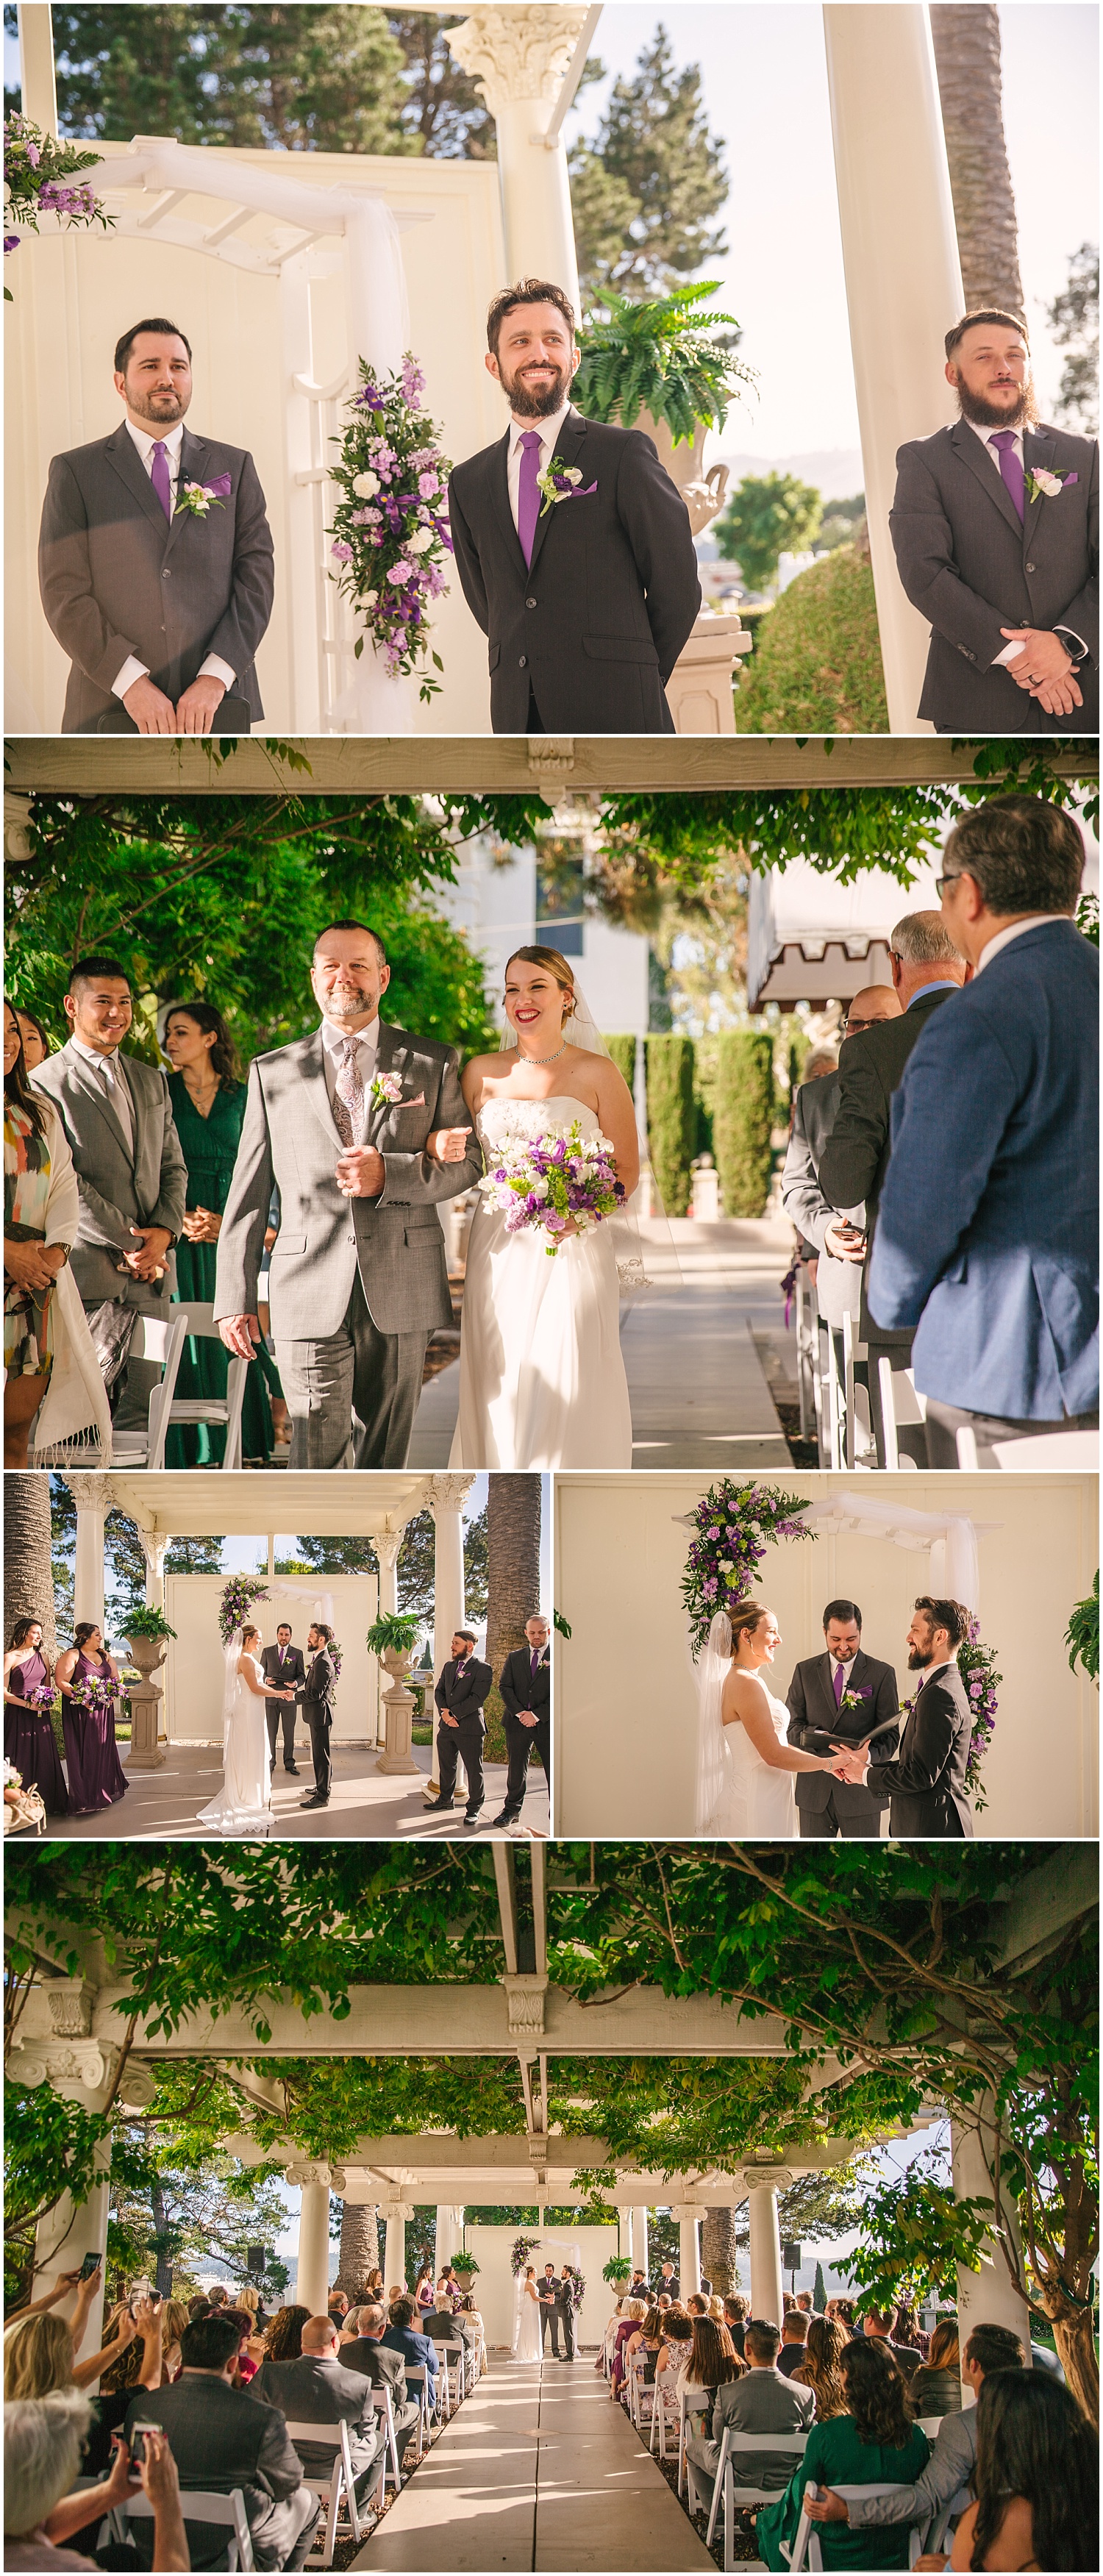 Jefferson Street Mansion wedding ceremony photos under wisteria